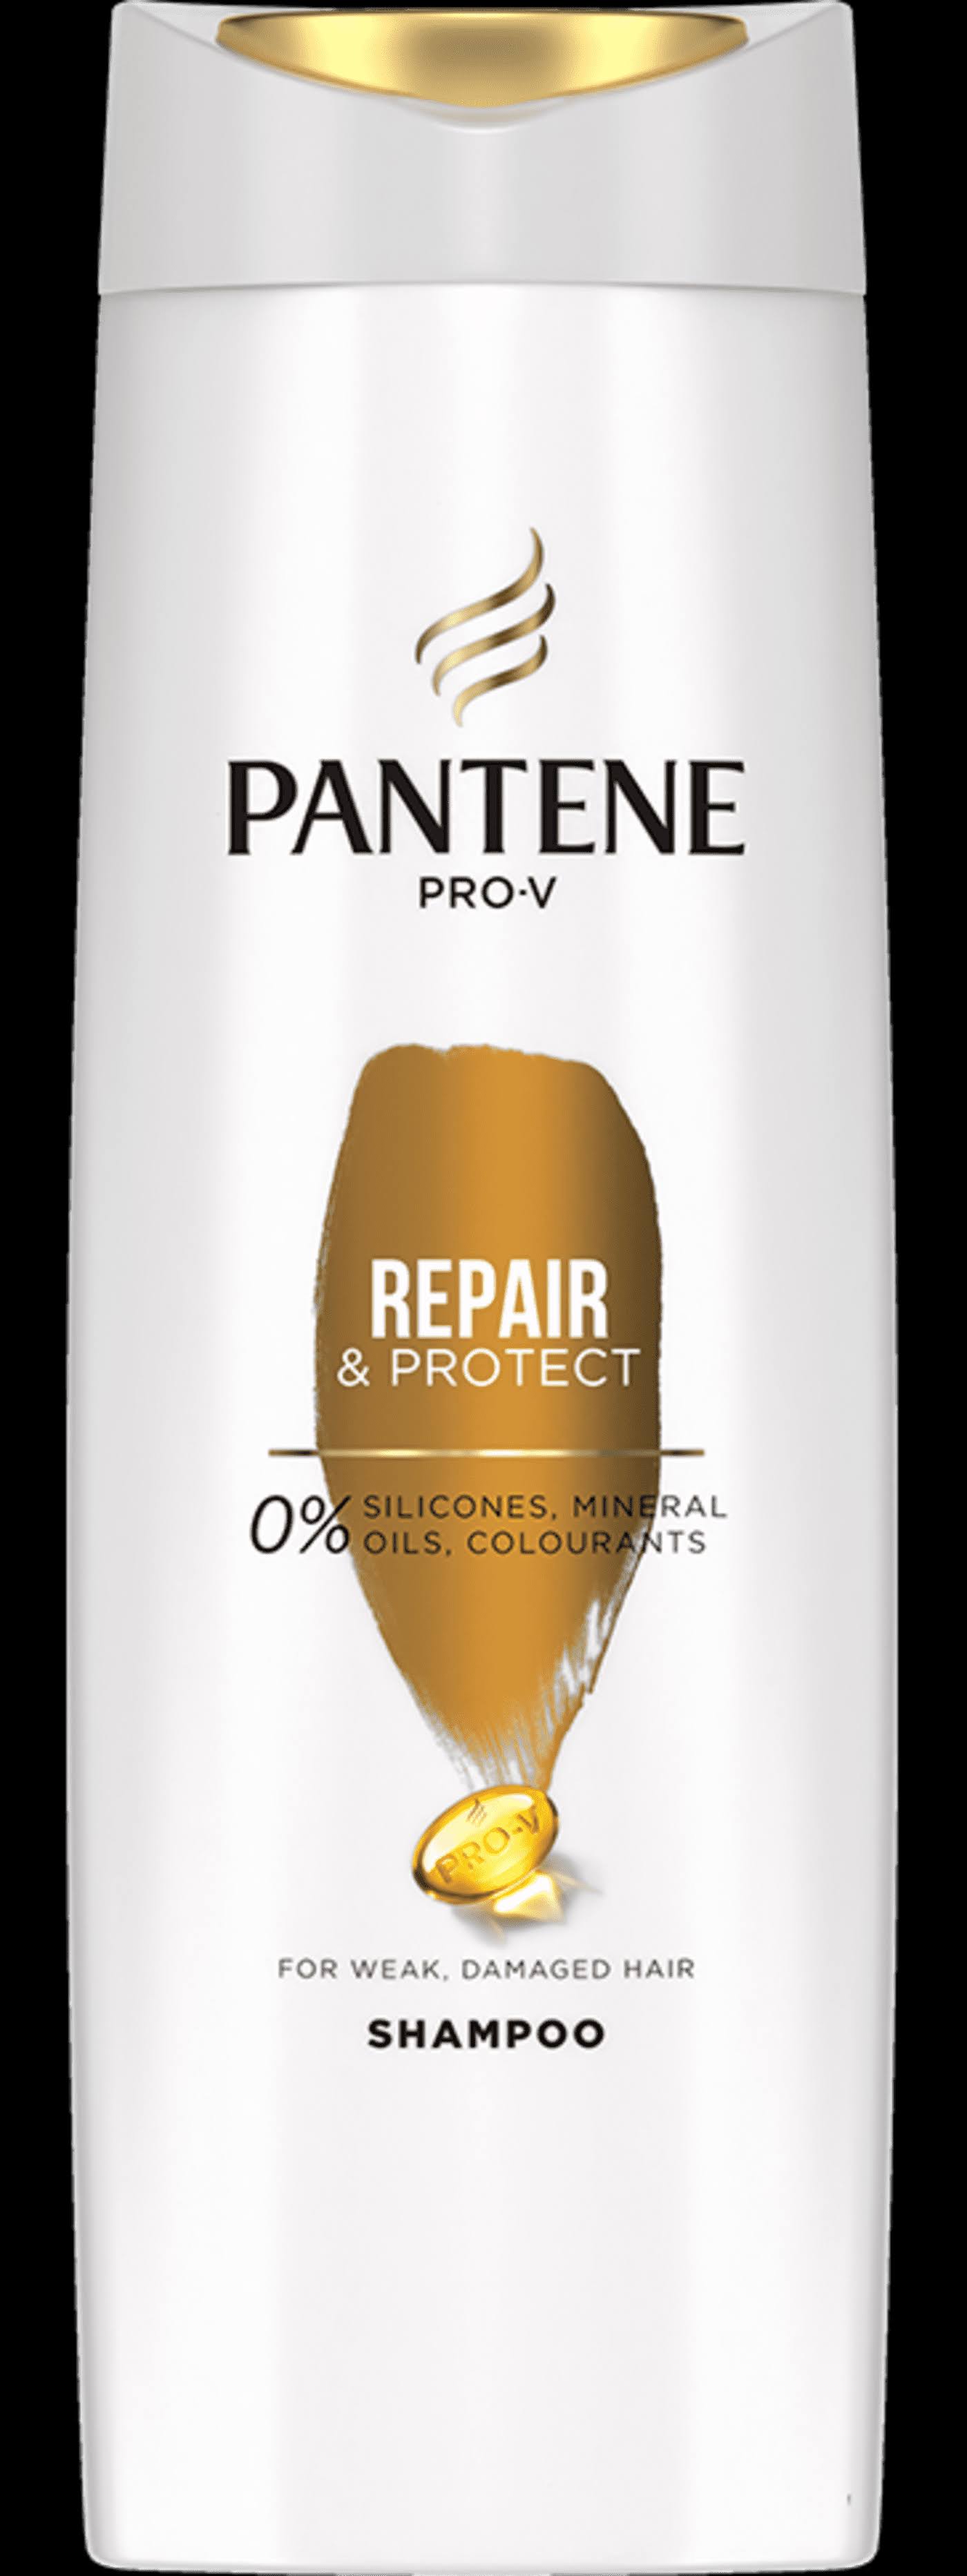 Pantene Pro-V Repair and Protect Shampoo - 270ml